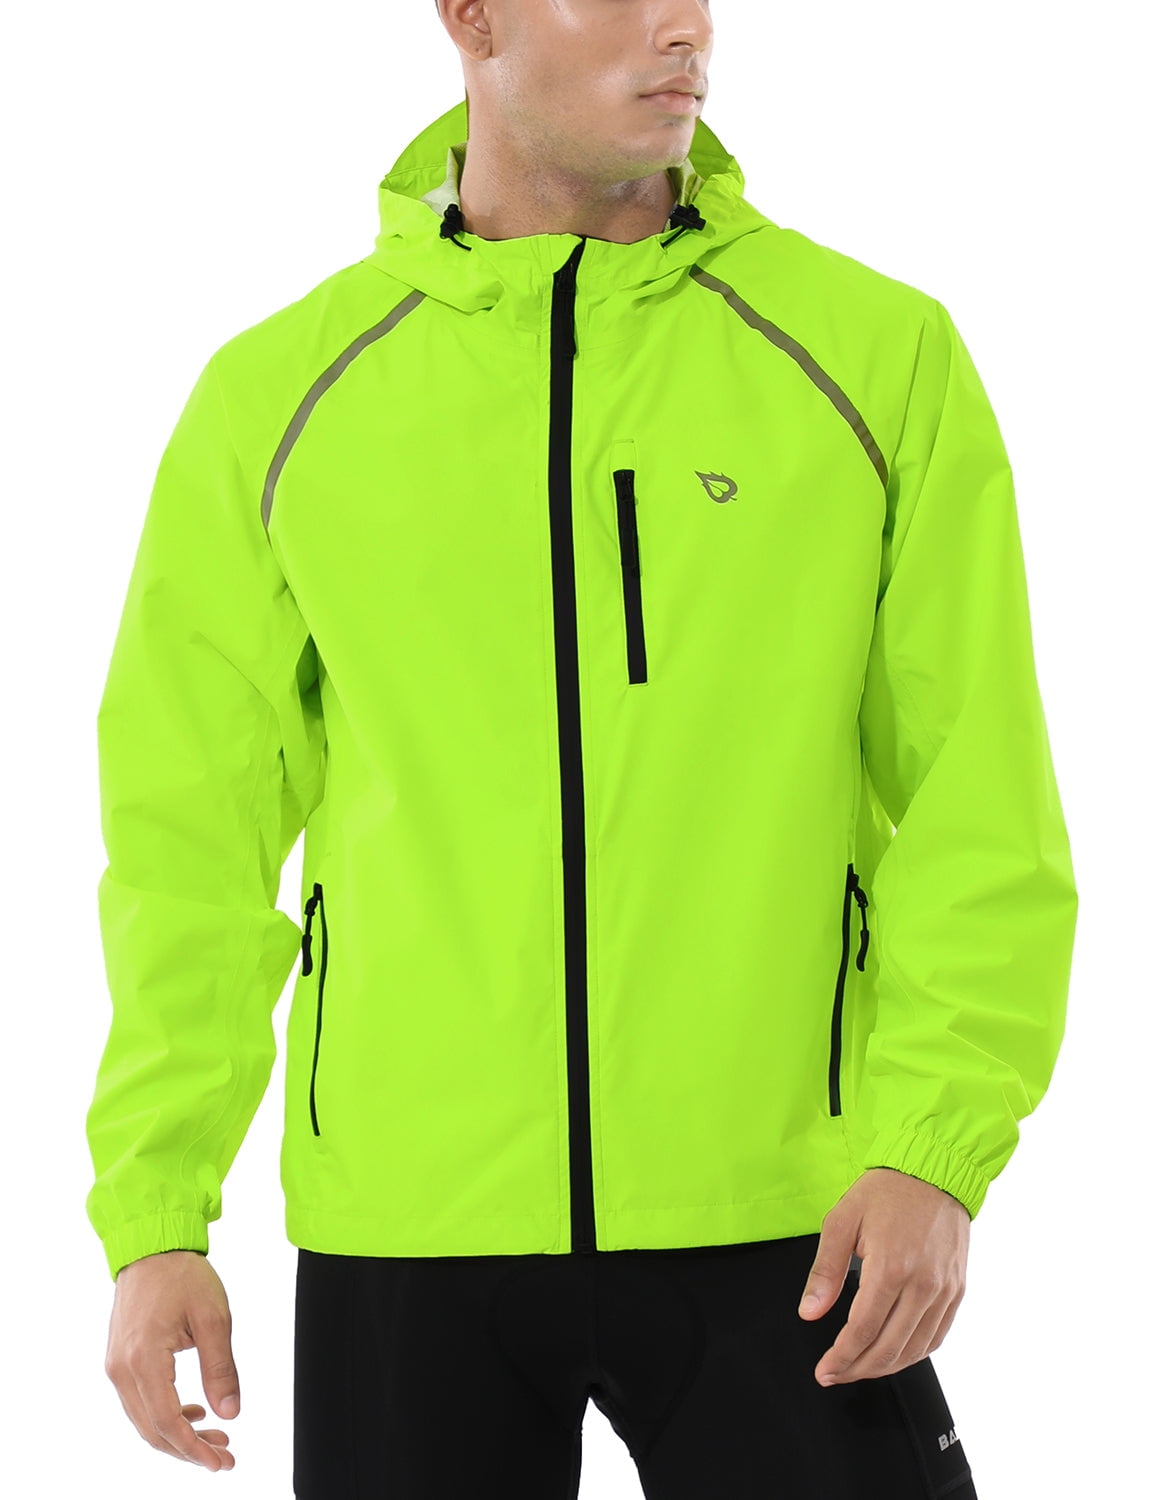 Men's Cycling Running Jacket Waterproof Windbreaker Reflective Yellow Size M -